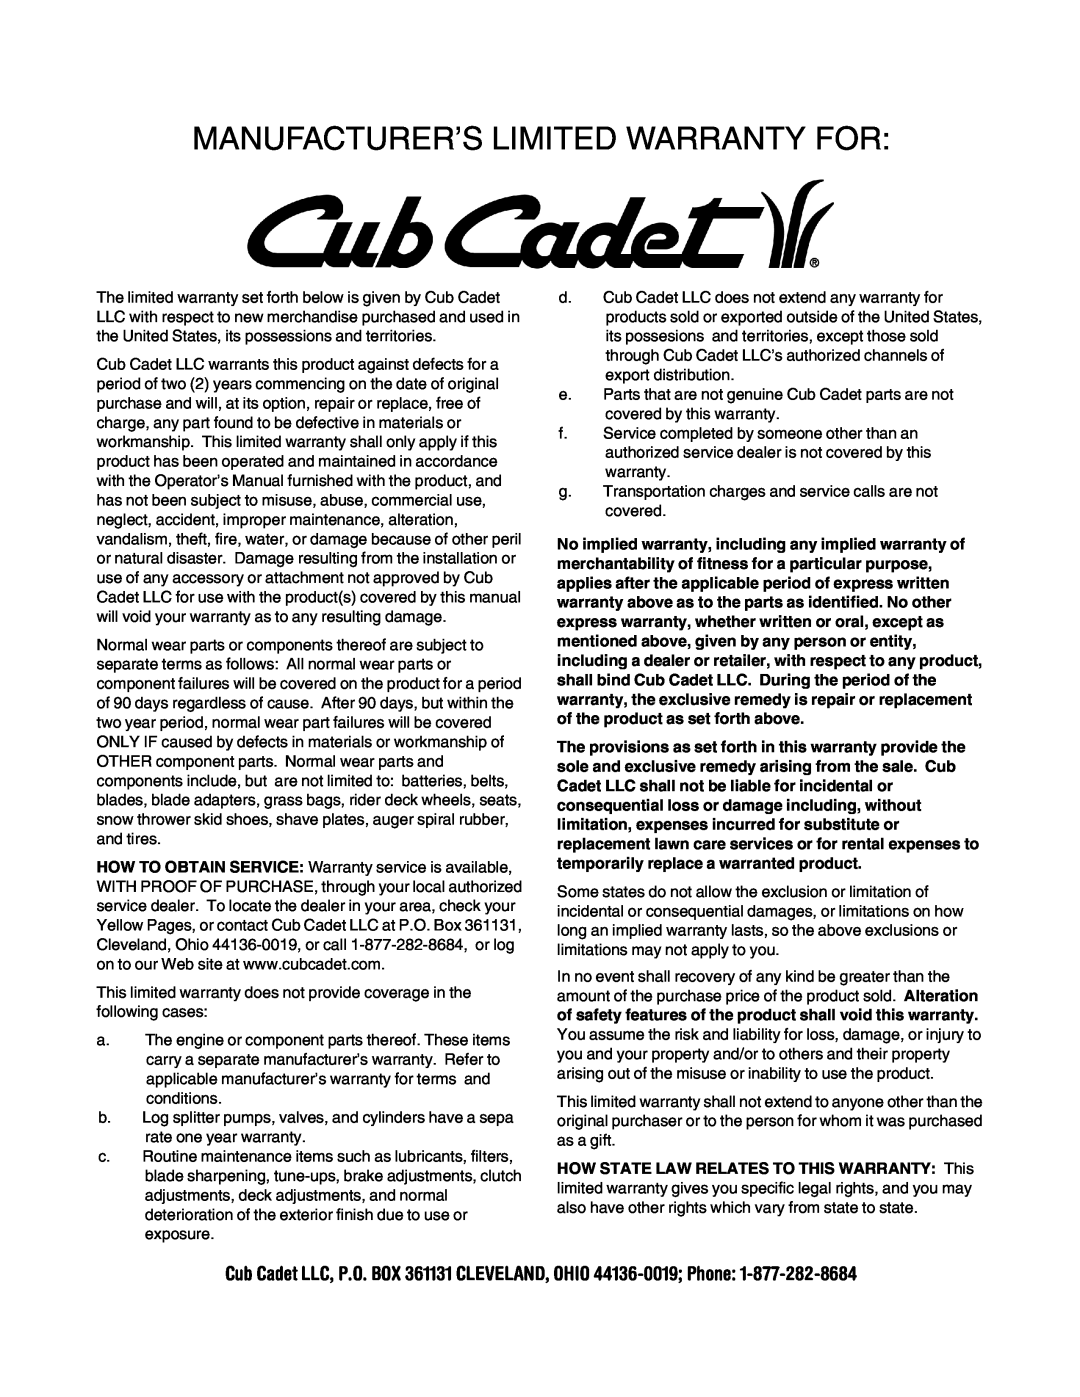 Cub Cadet 977A, E977C Cub Cadet LLC, P.O. BOX 361131 CLEVELAND, OHIO 44136-0019 Phone, Manufacturer’S Limited Warranty For 